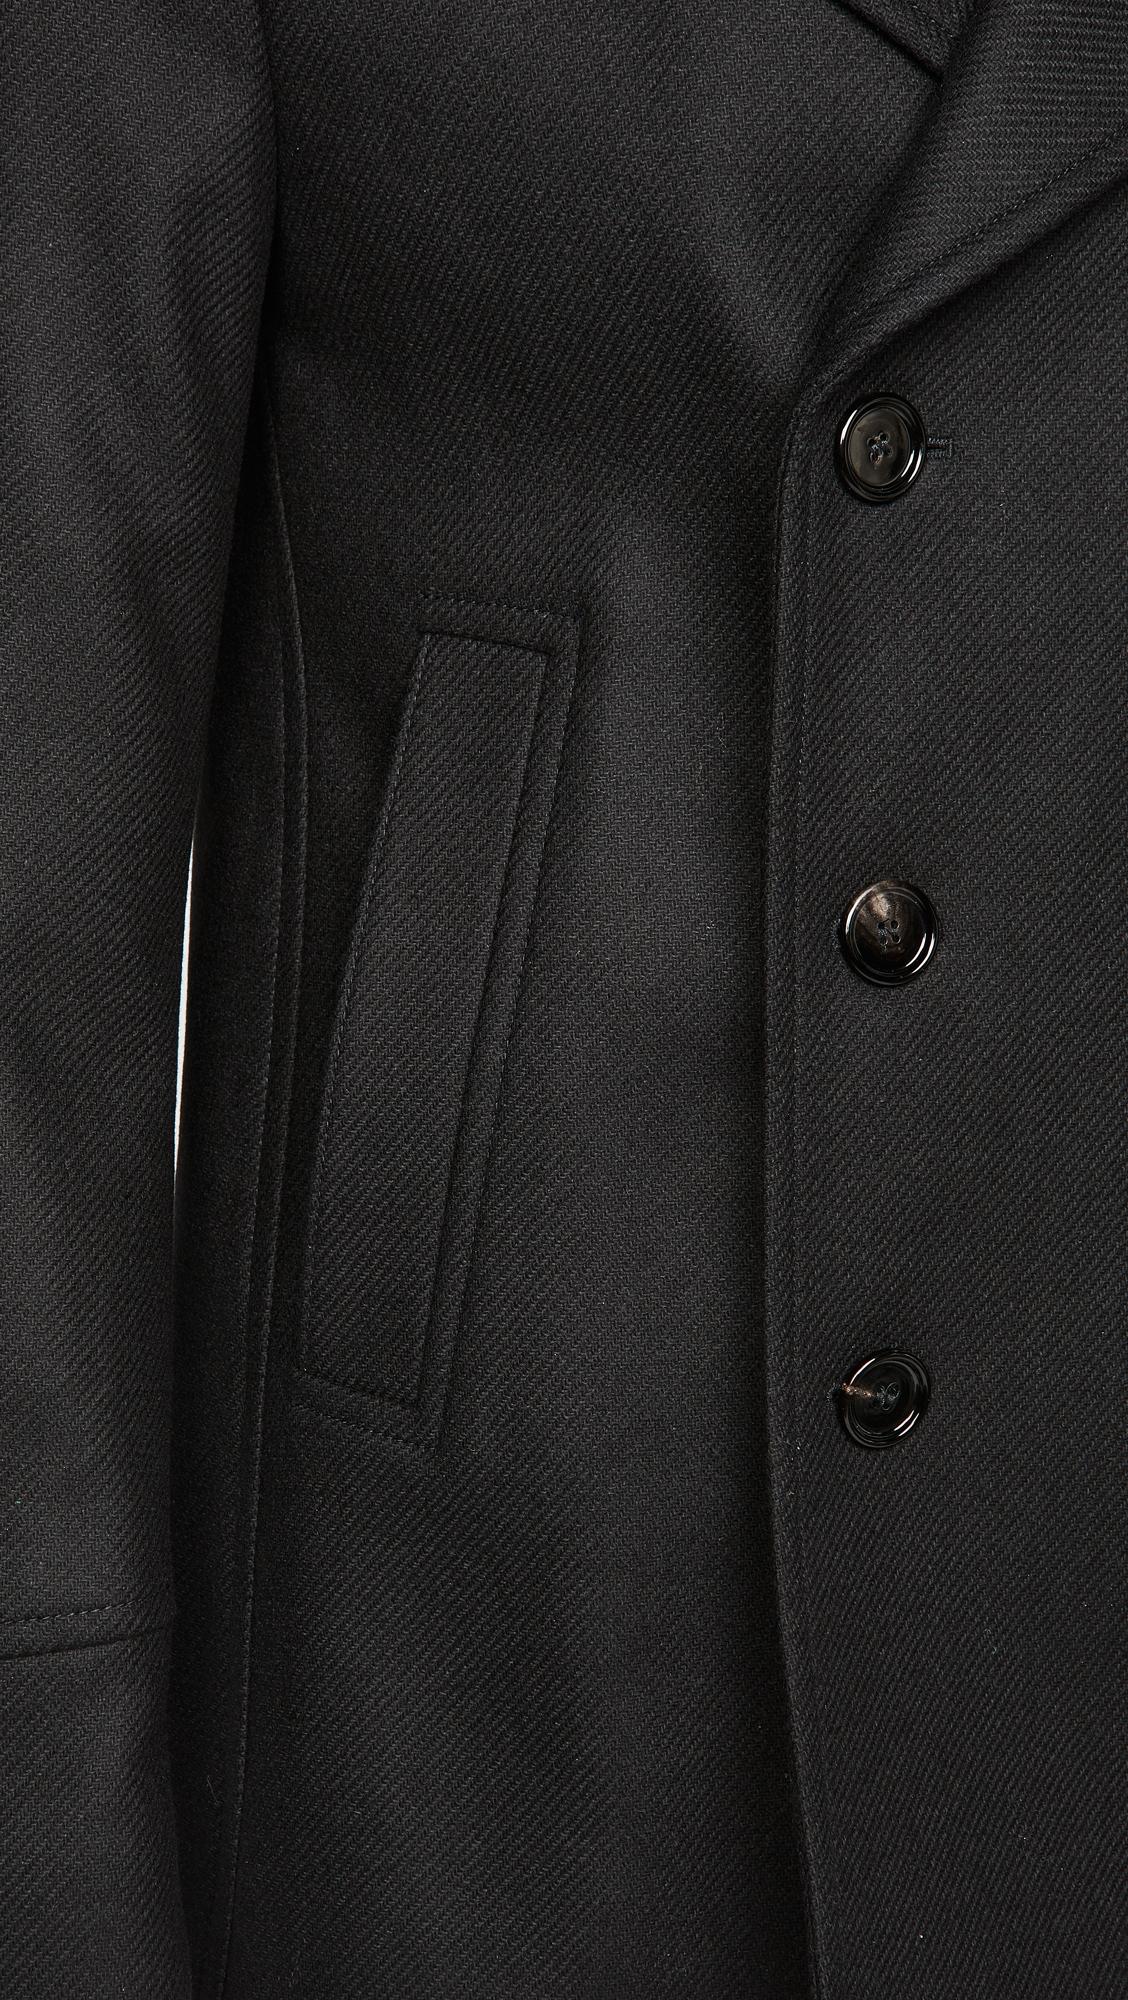 BOSS by Hugo Boss Wool Double Breasted Pea Coat in Black for Men - Lyst